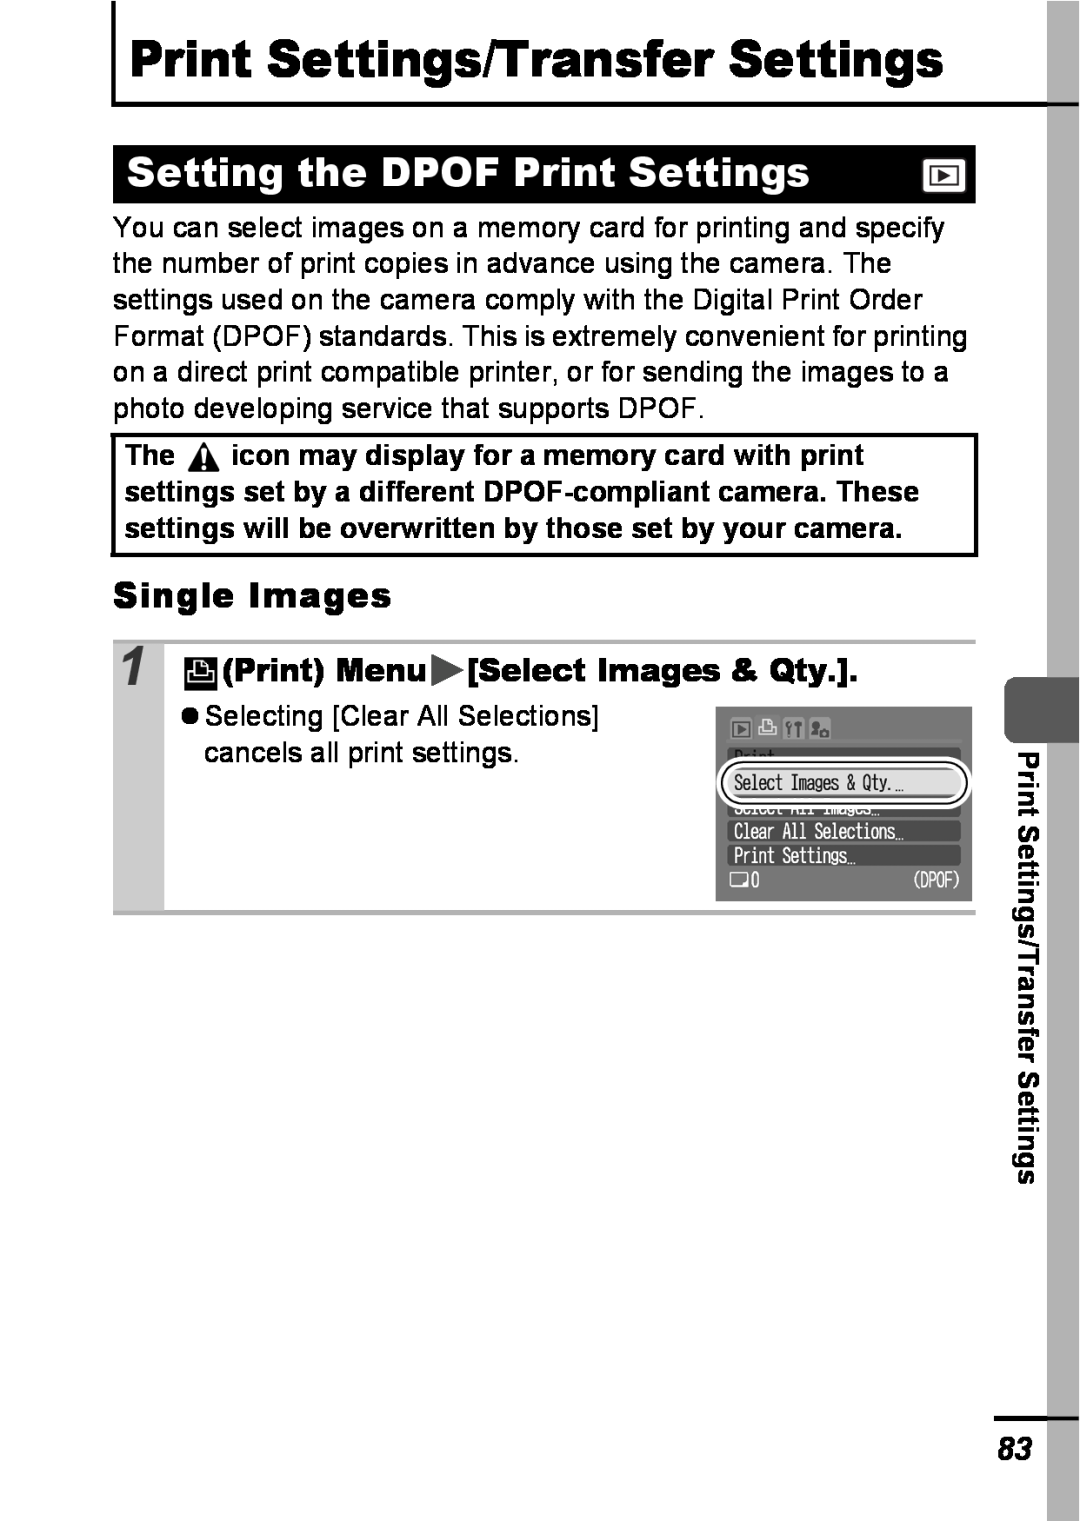 Canon A540 appendix Print Settings/Transfer Settings, Setting the DPOF Print Settings, Single Images 